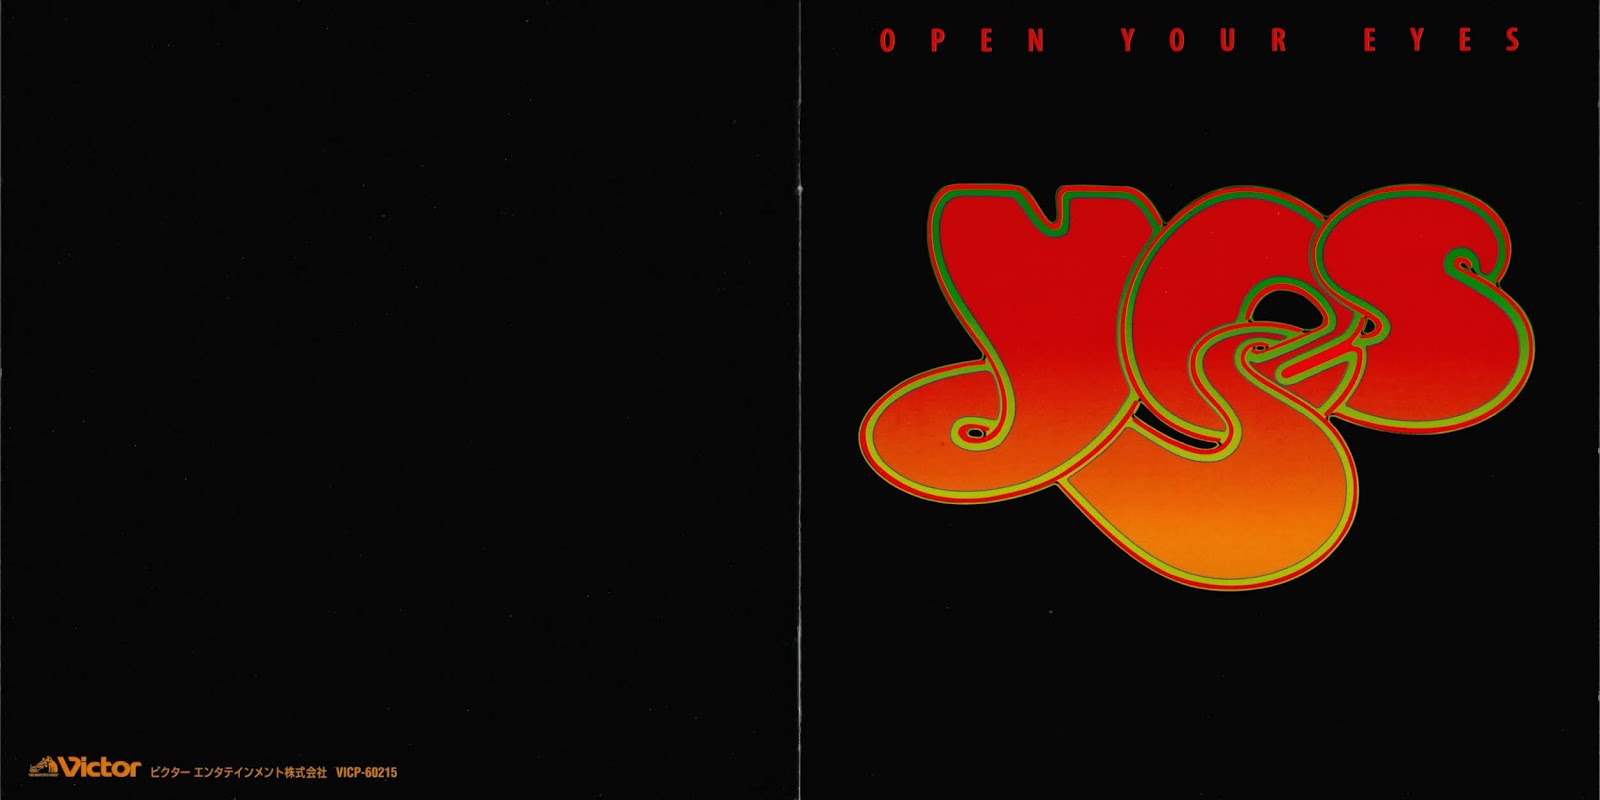 Yes friend. Yes open your Eyes 1997. Группа Yes 1969. Yes дискография. Группа Yes обложки альбомов.